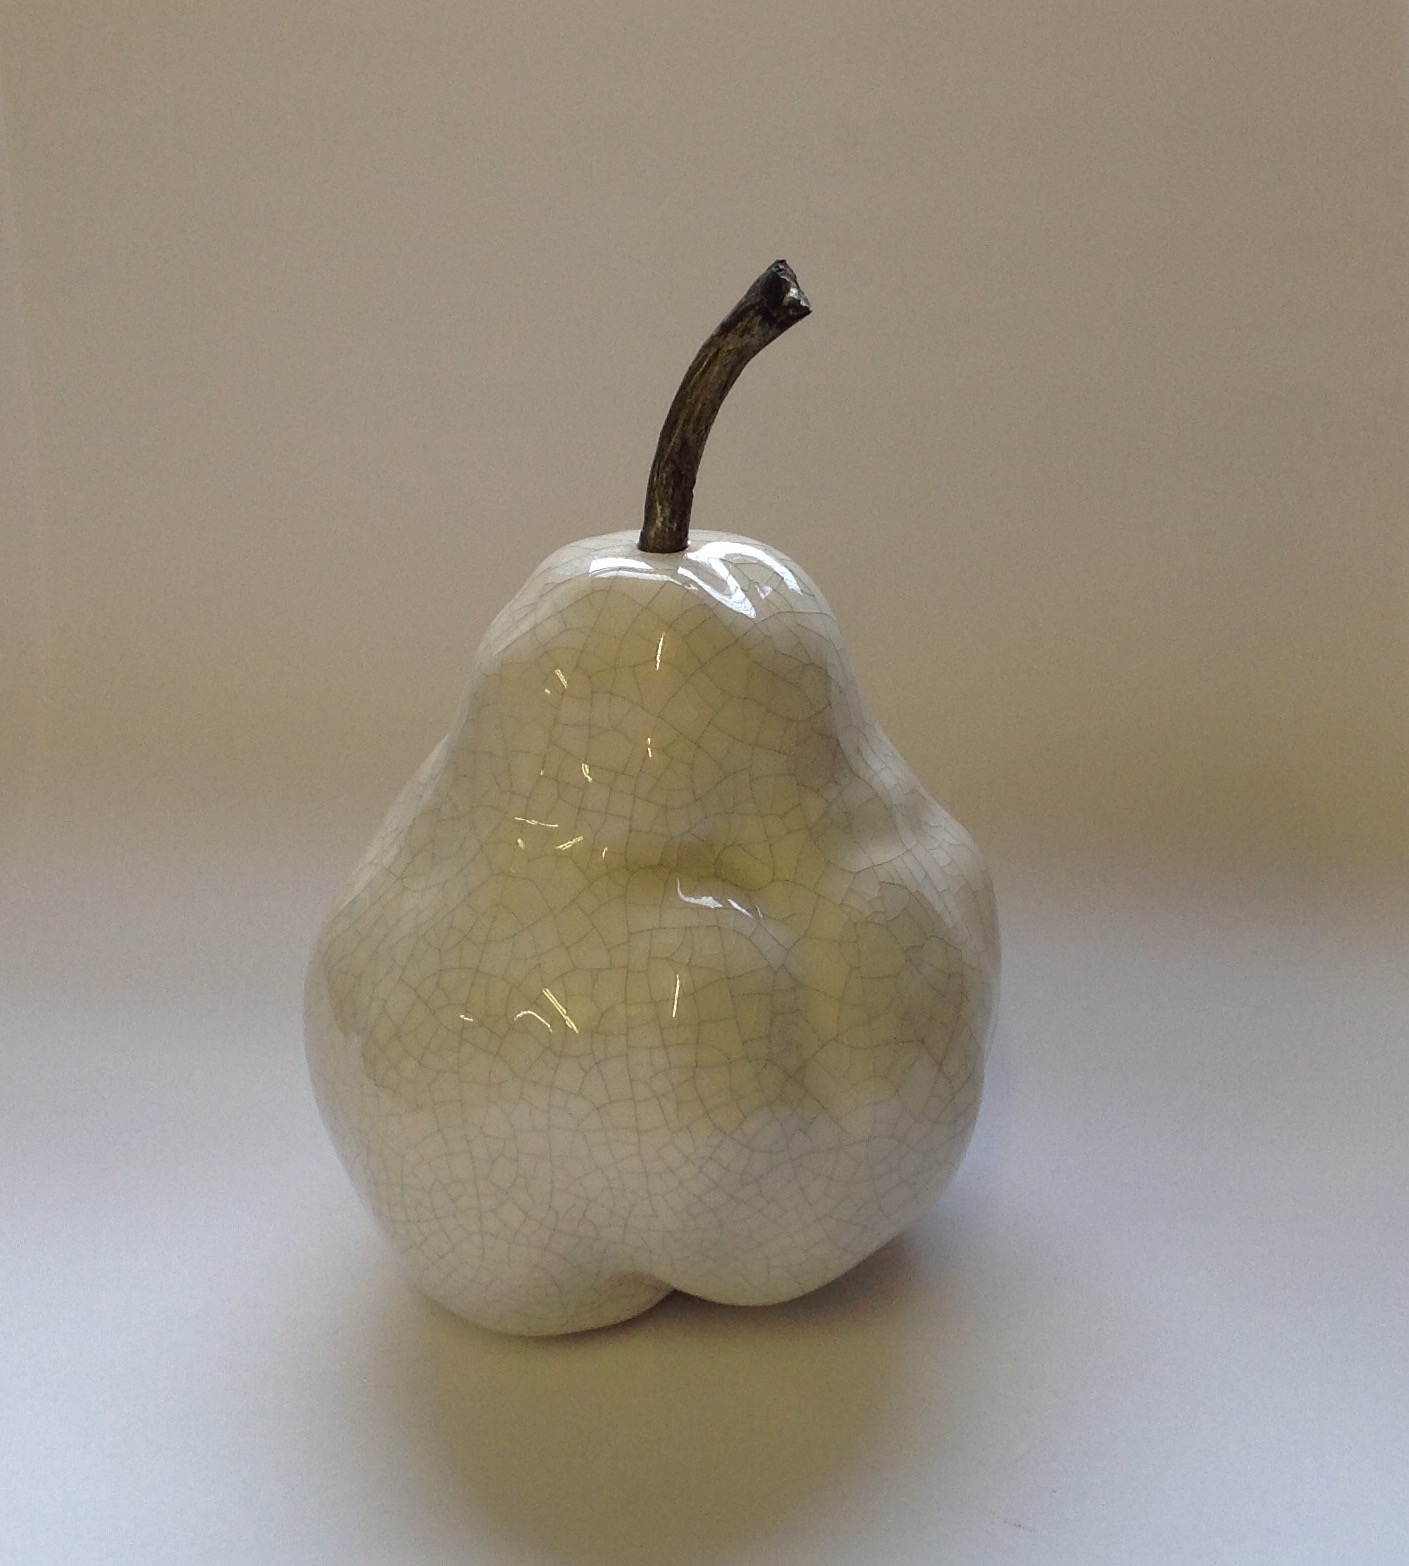 Big pear